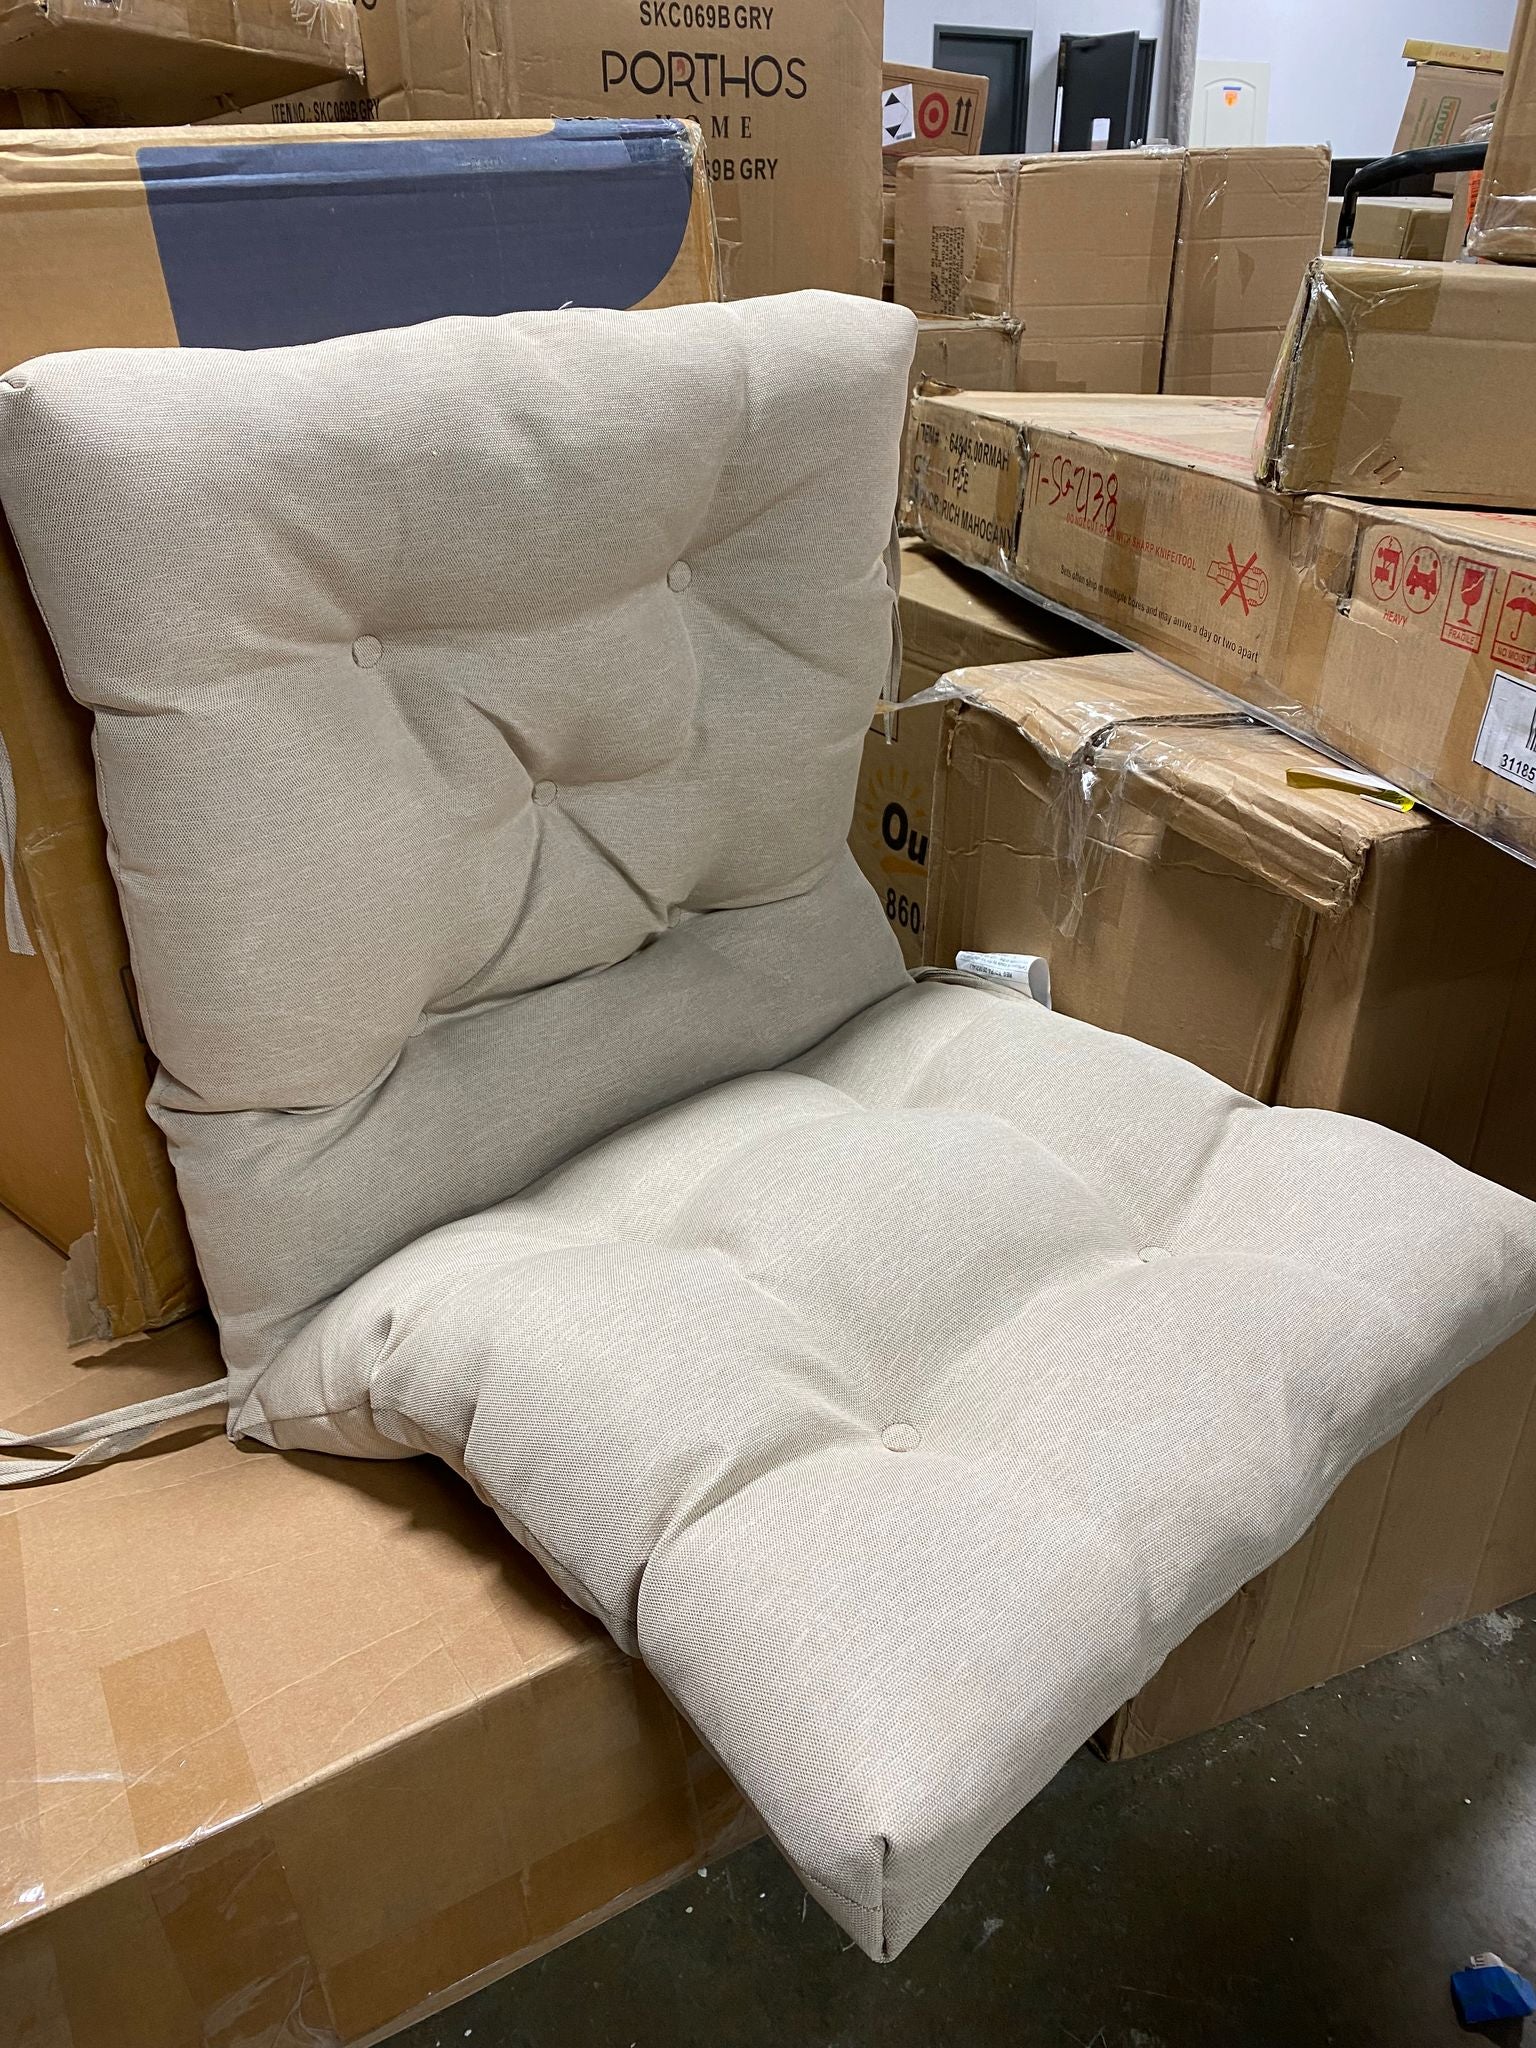 Ebern Designs 1 - Piece Outdoor Seat/Back Cushion